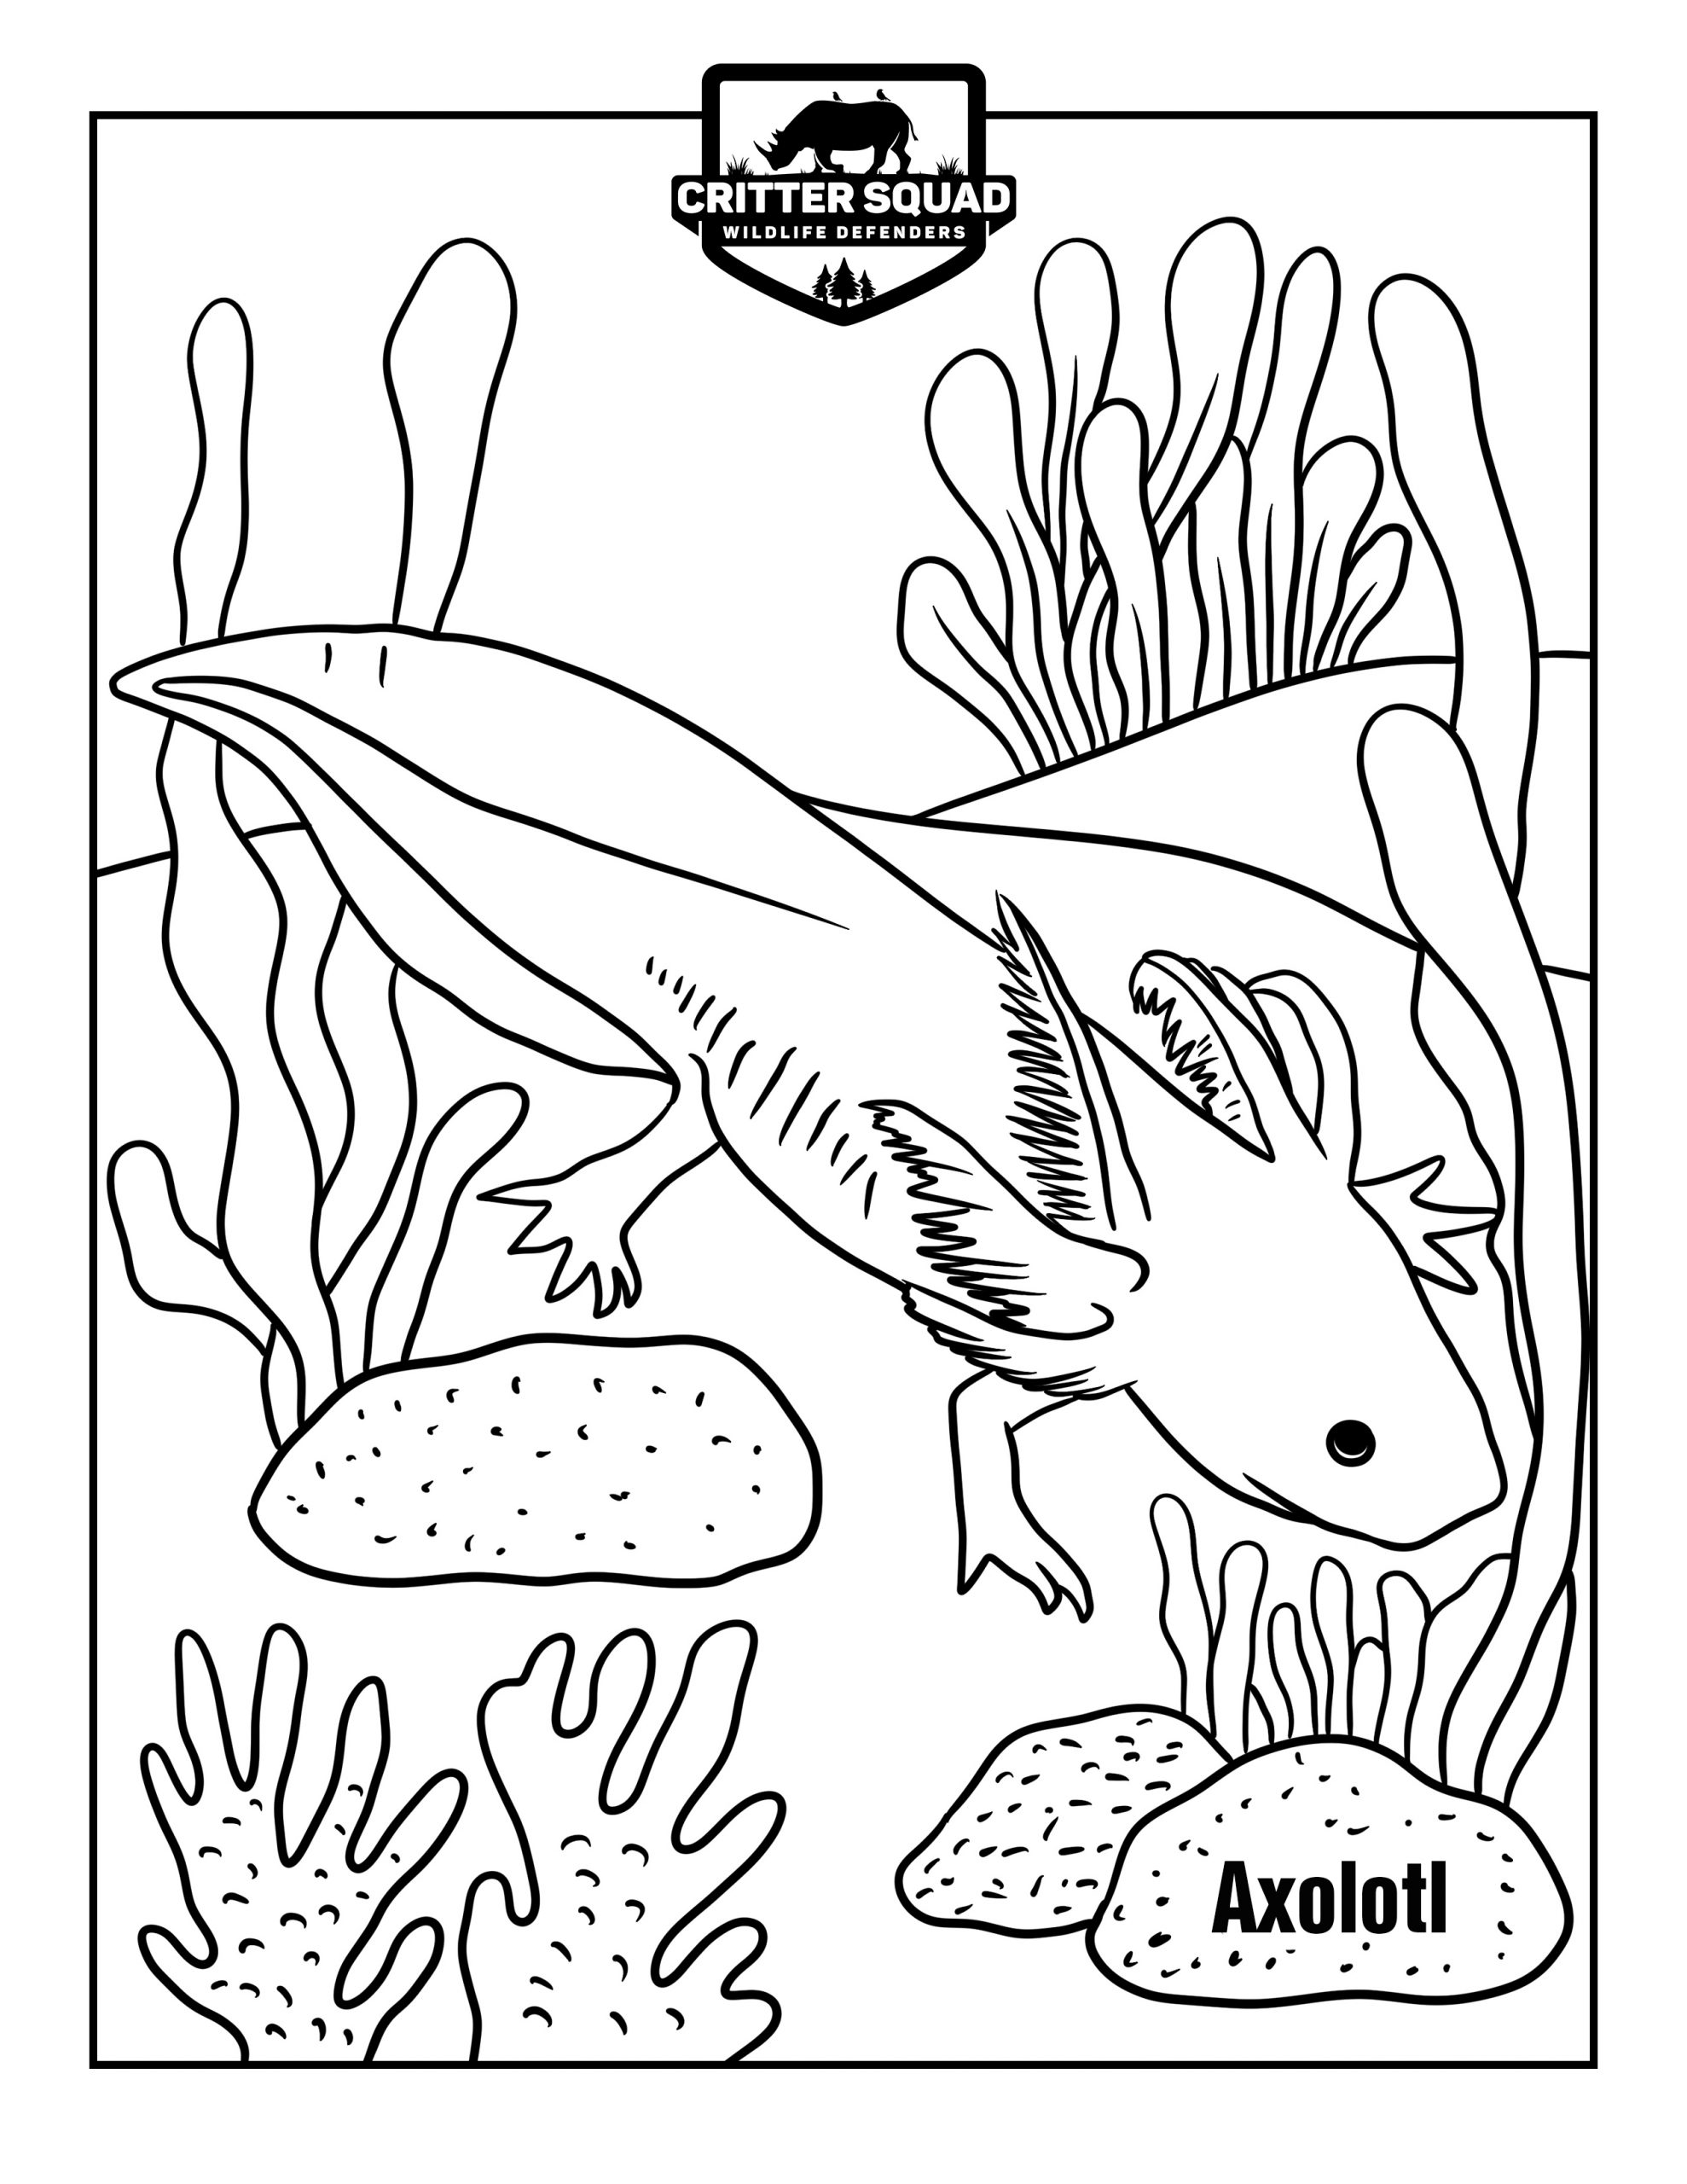 Axolotl Coloring Page - C.S.W.D